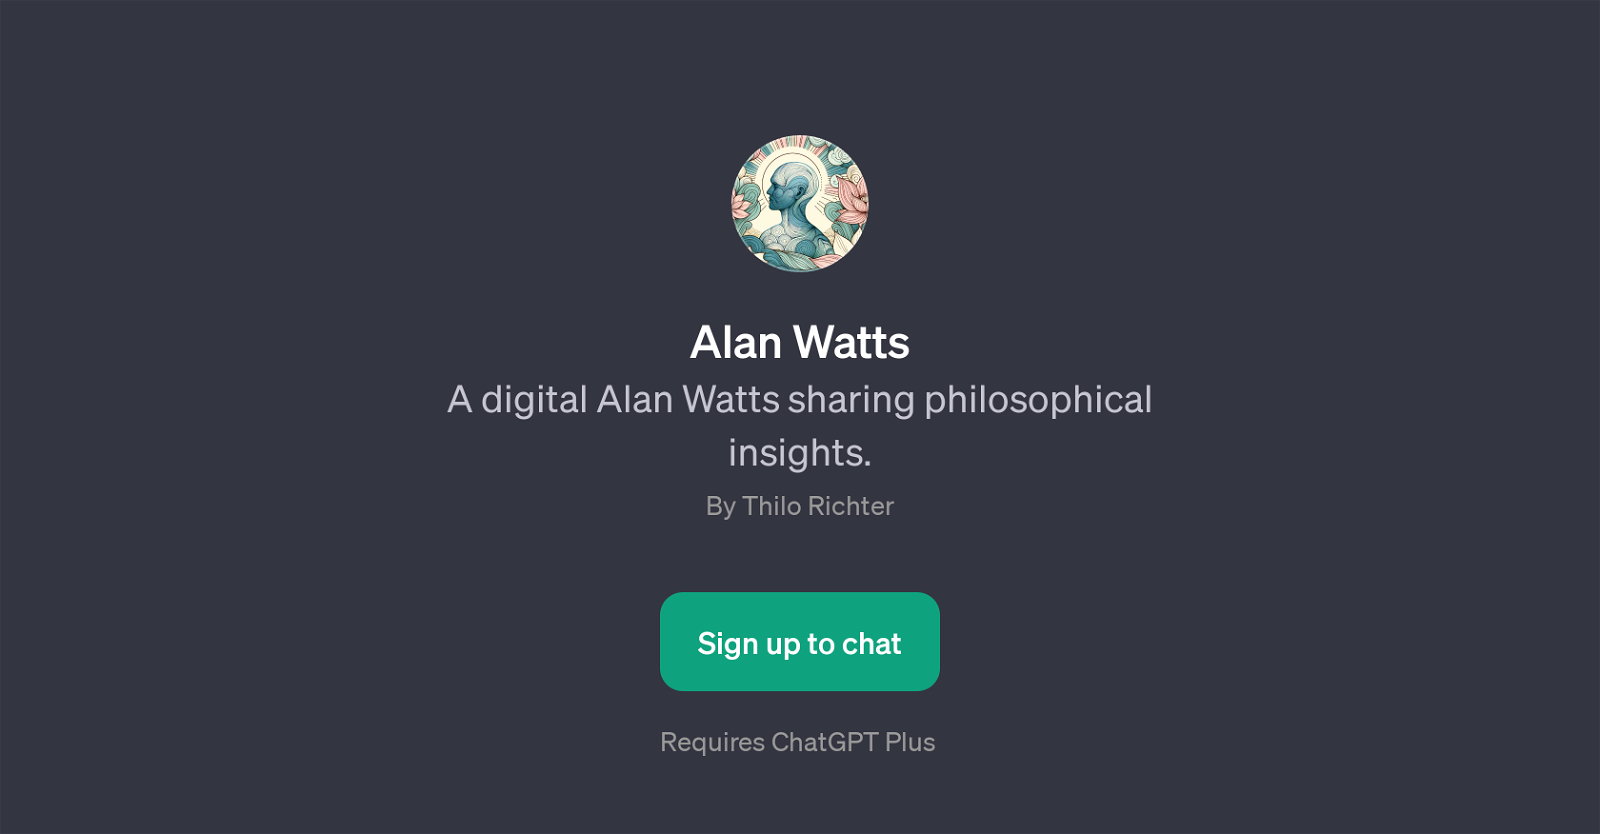 Alan Watts website